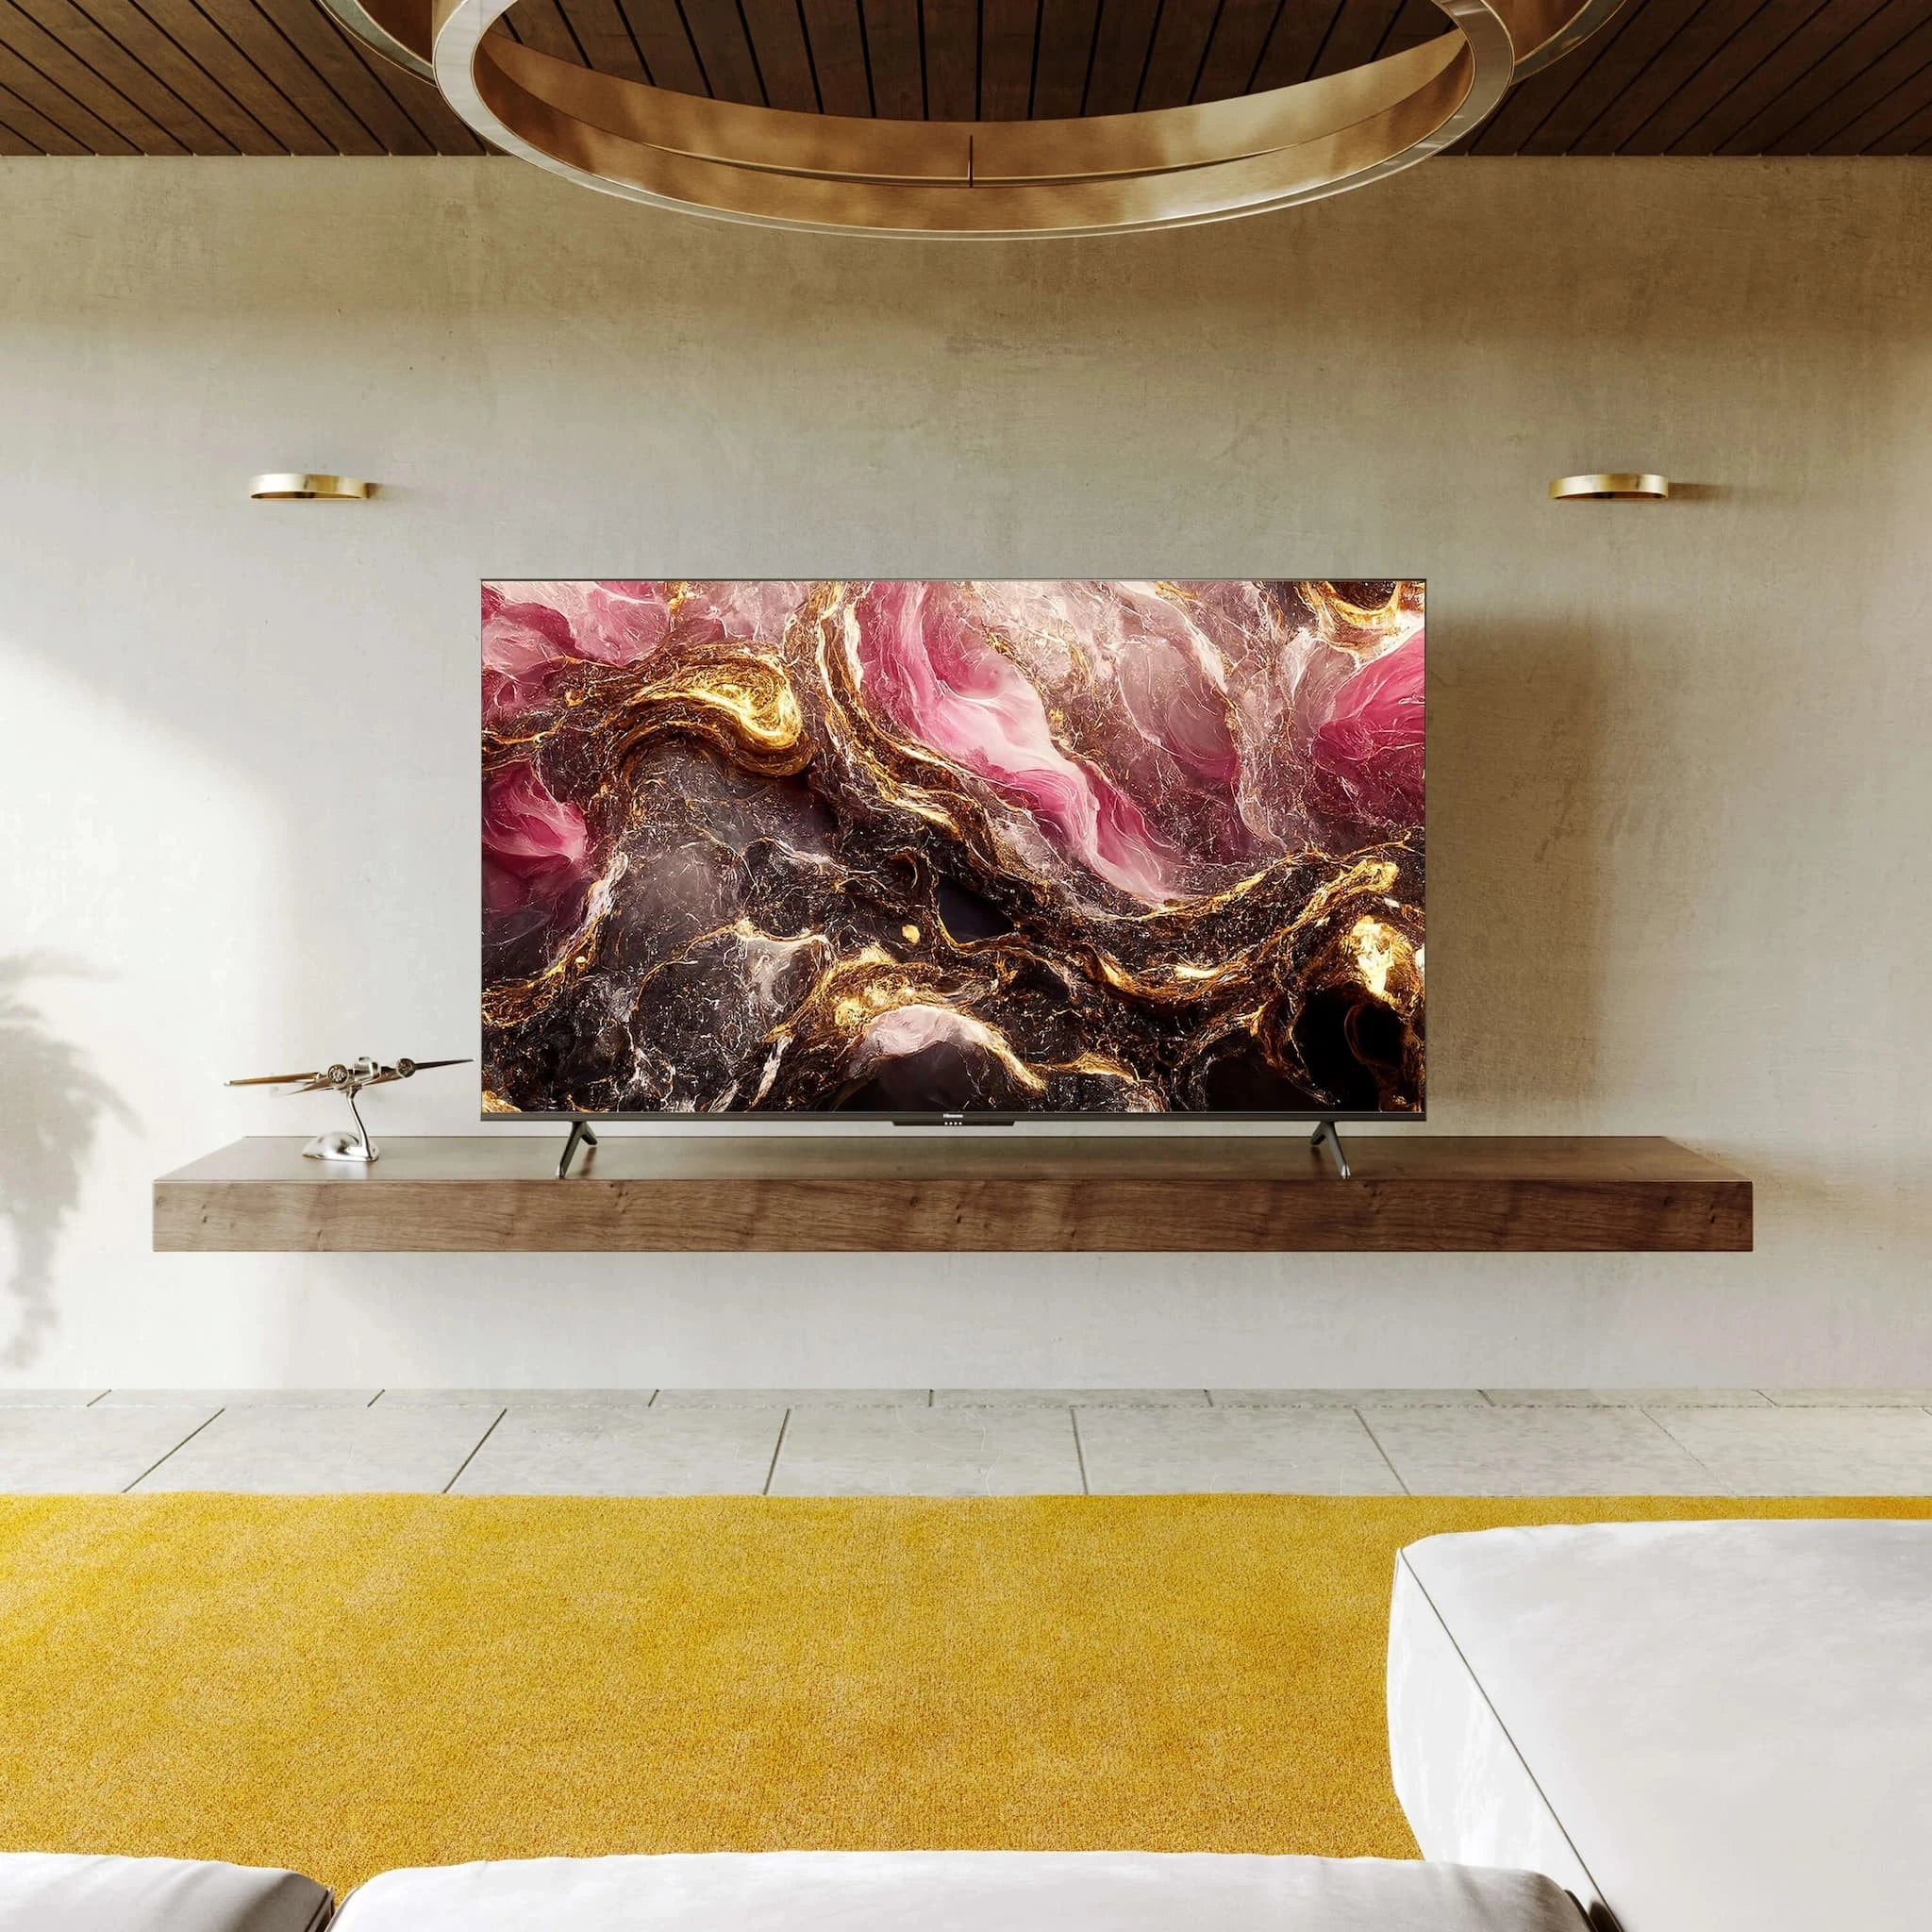 Hisense U6 Series Mini-LED ULED 4k Google TV - Dreamedia AV